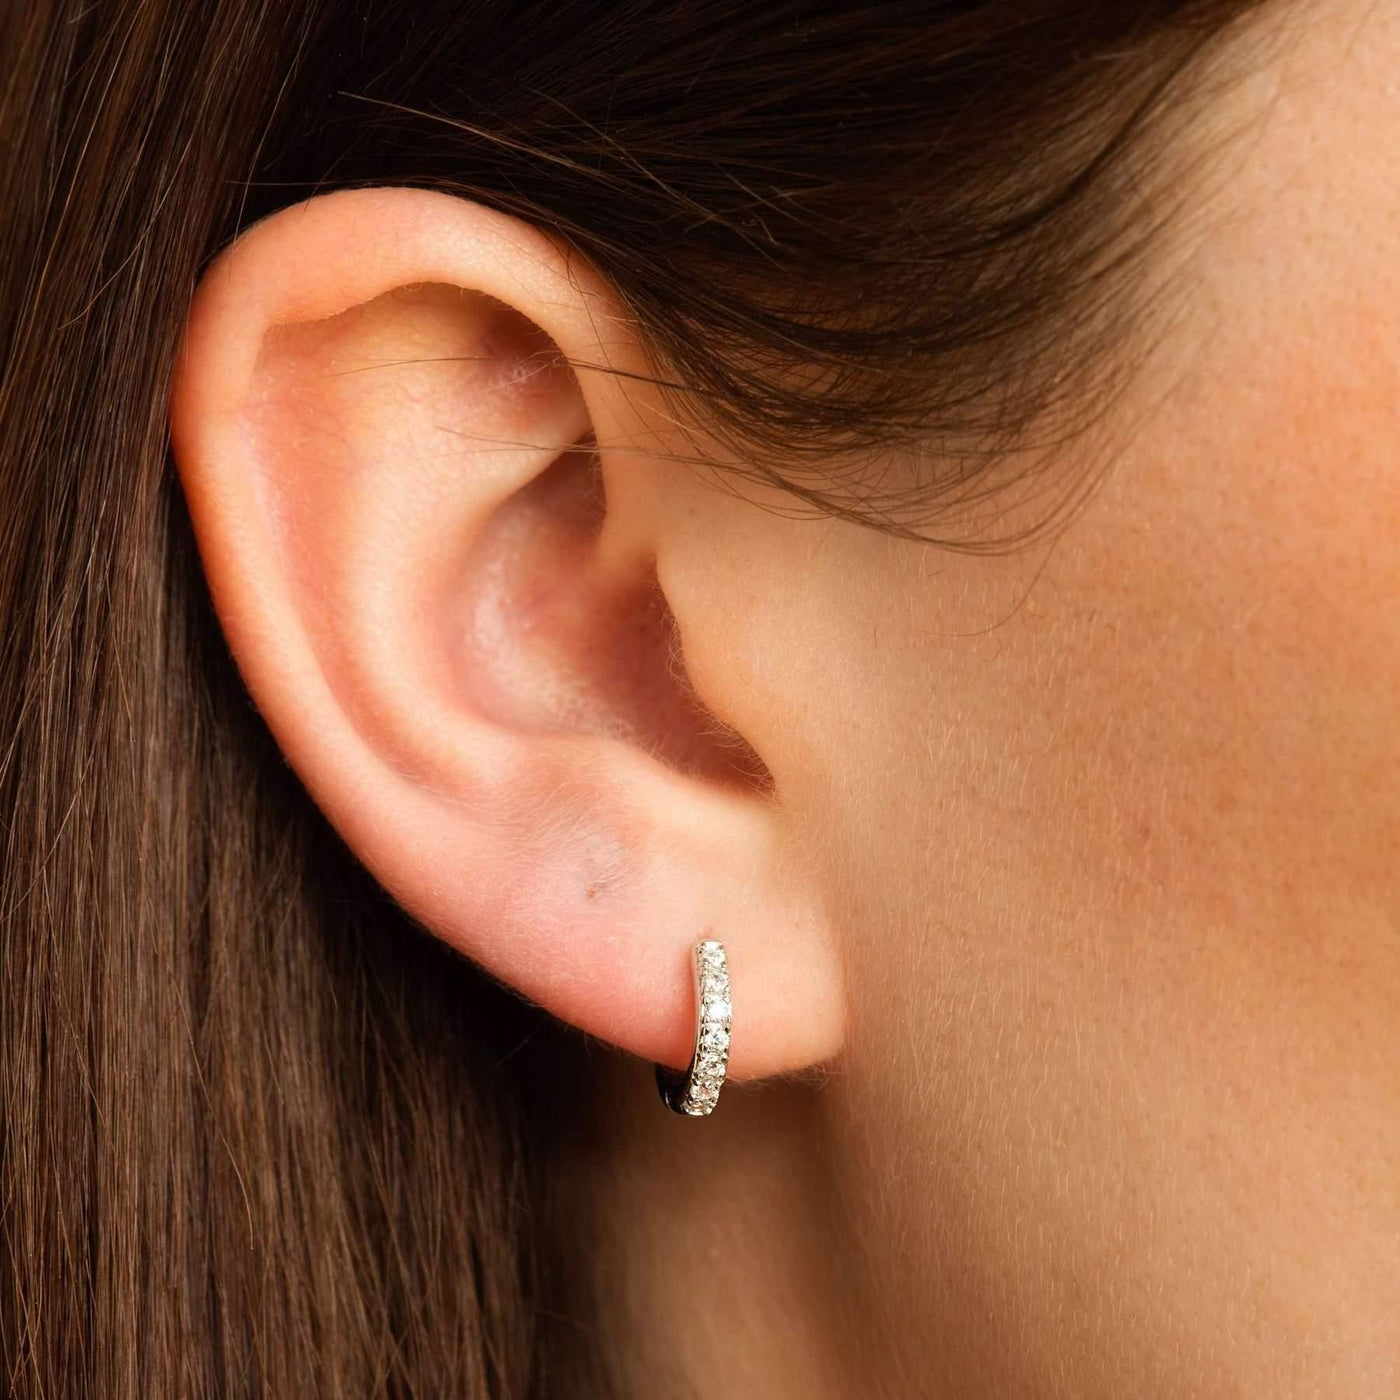 Scream Pretty Huggie Earrings with Clear Stones - Rococo Jewellery